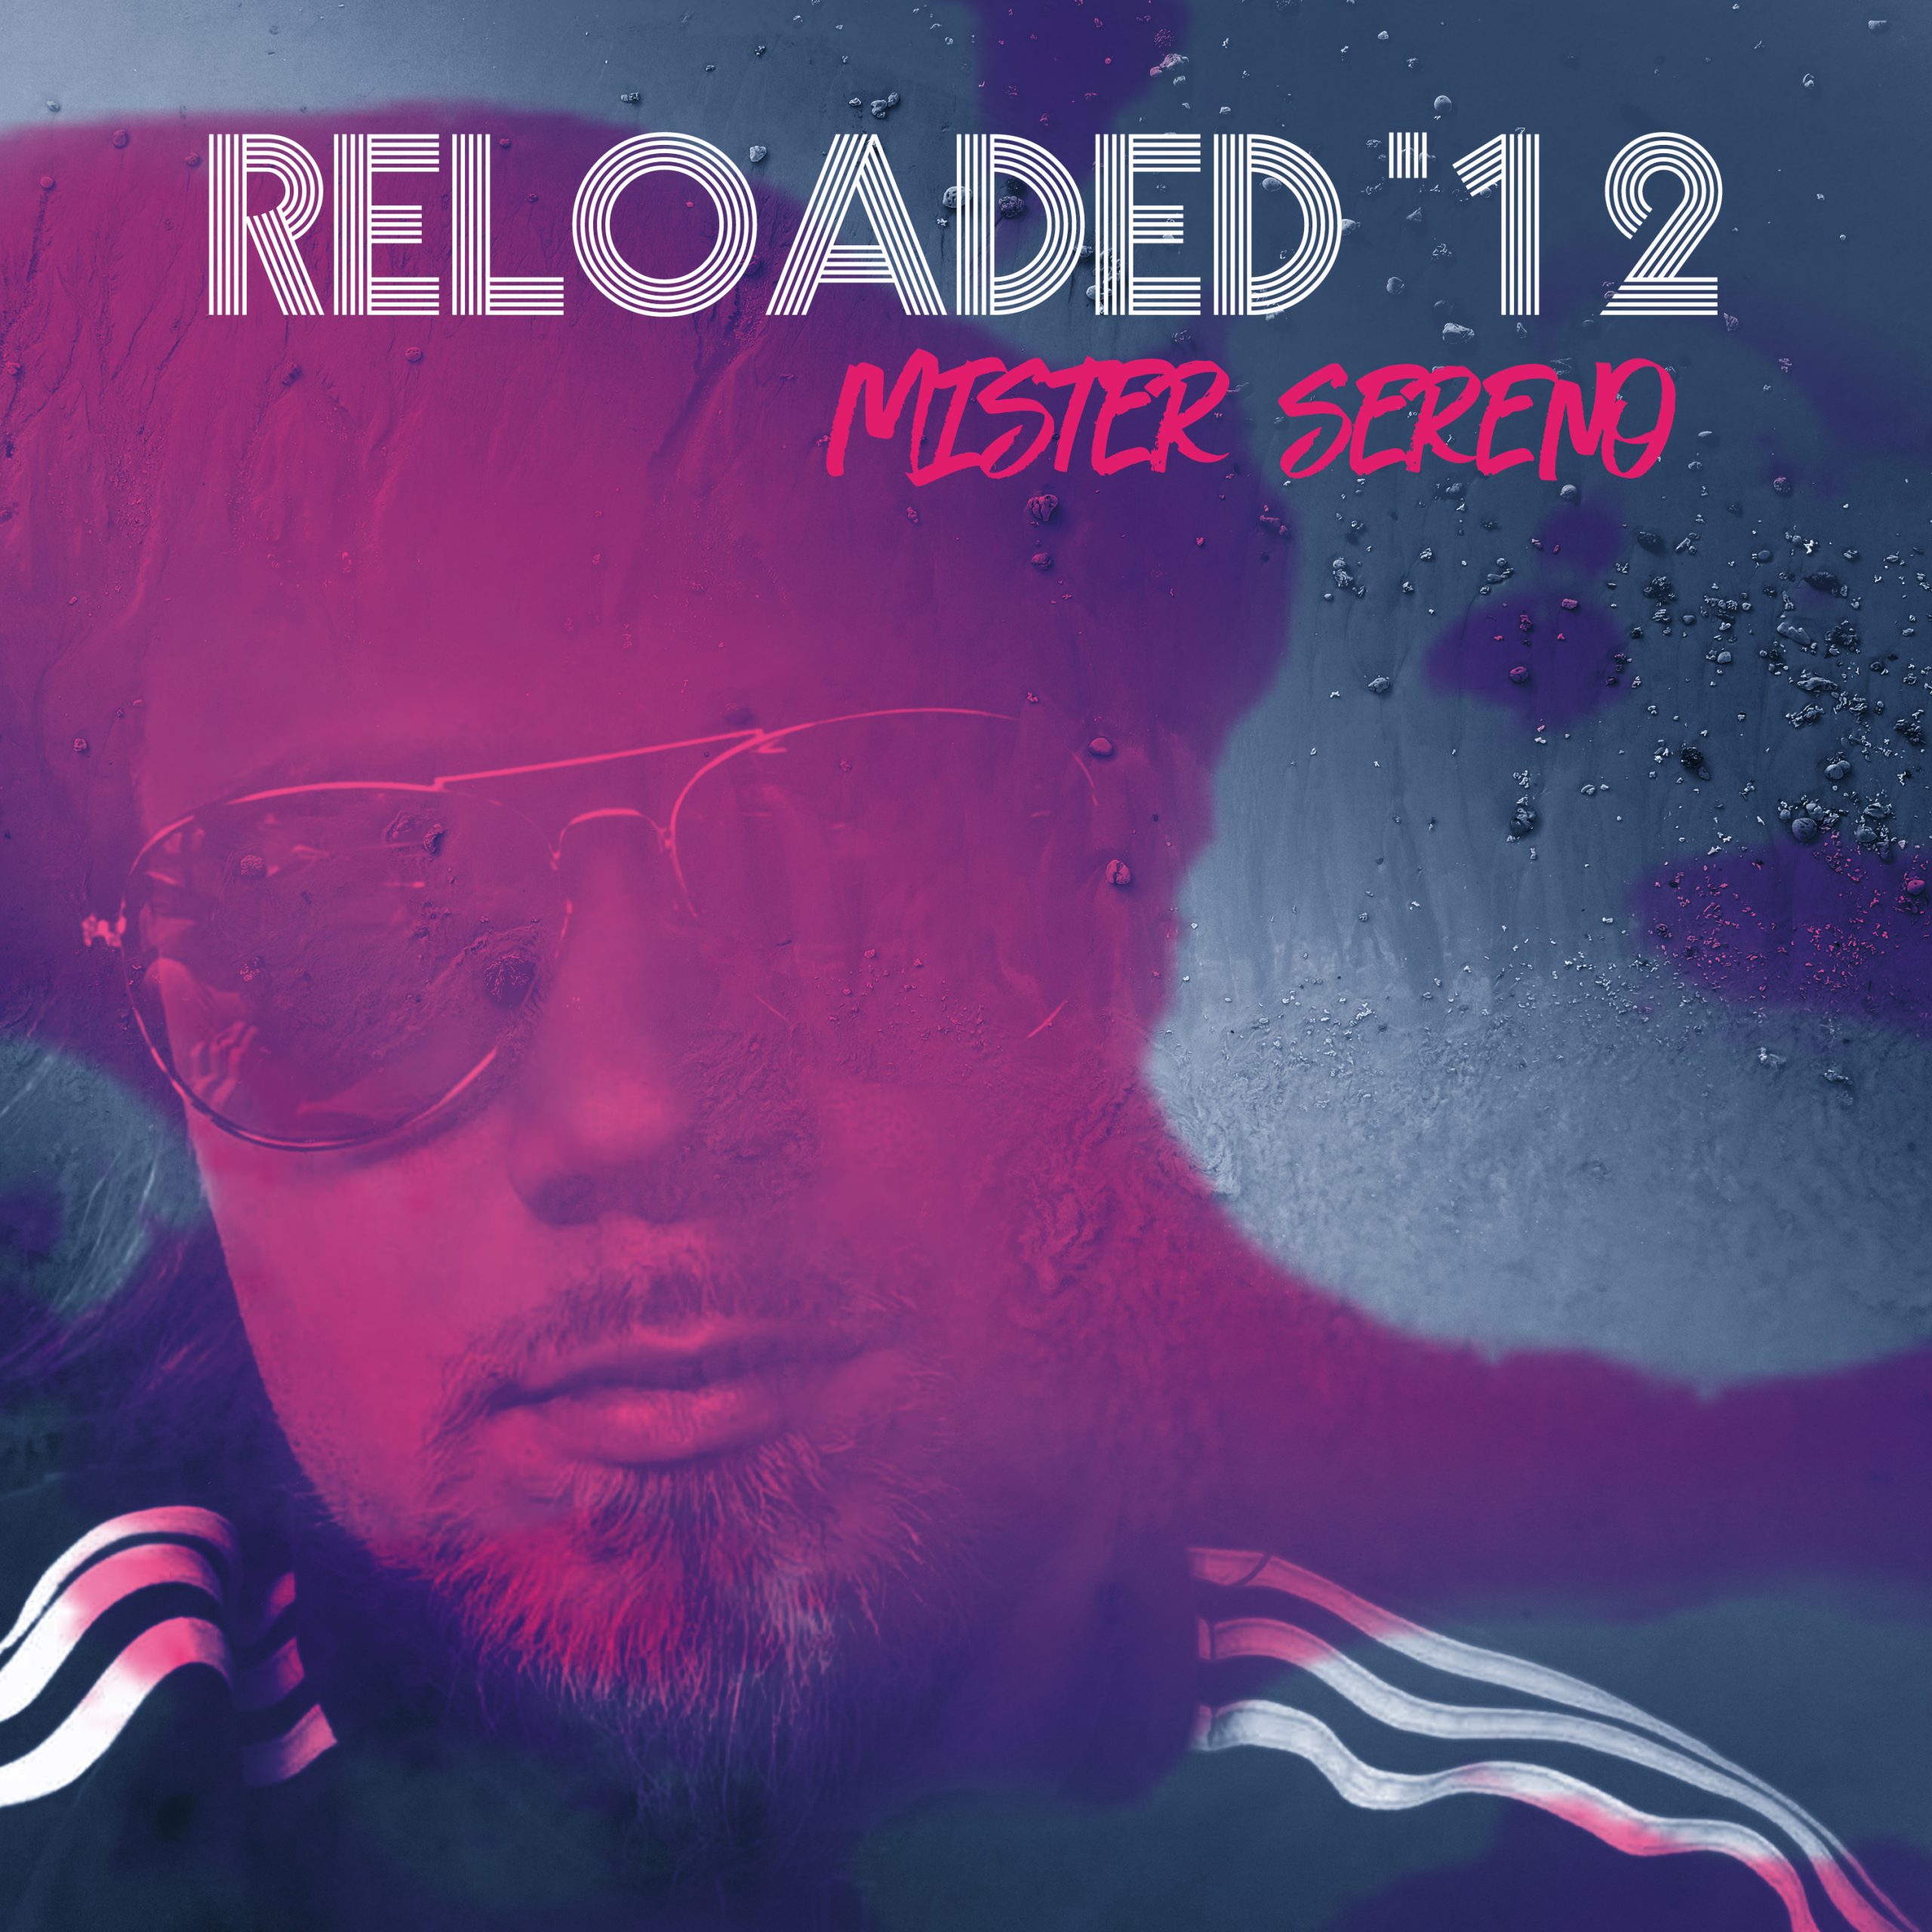 Mister-Sereno-Reloaded-12-COVER-scaled-1.jpg